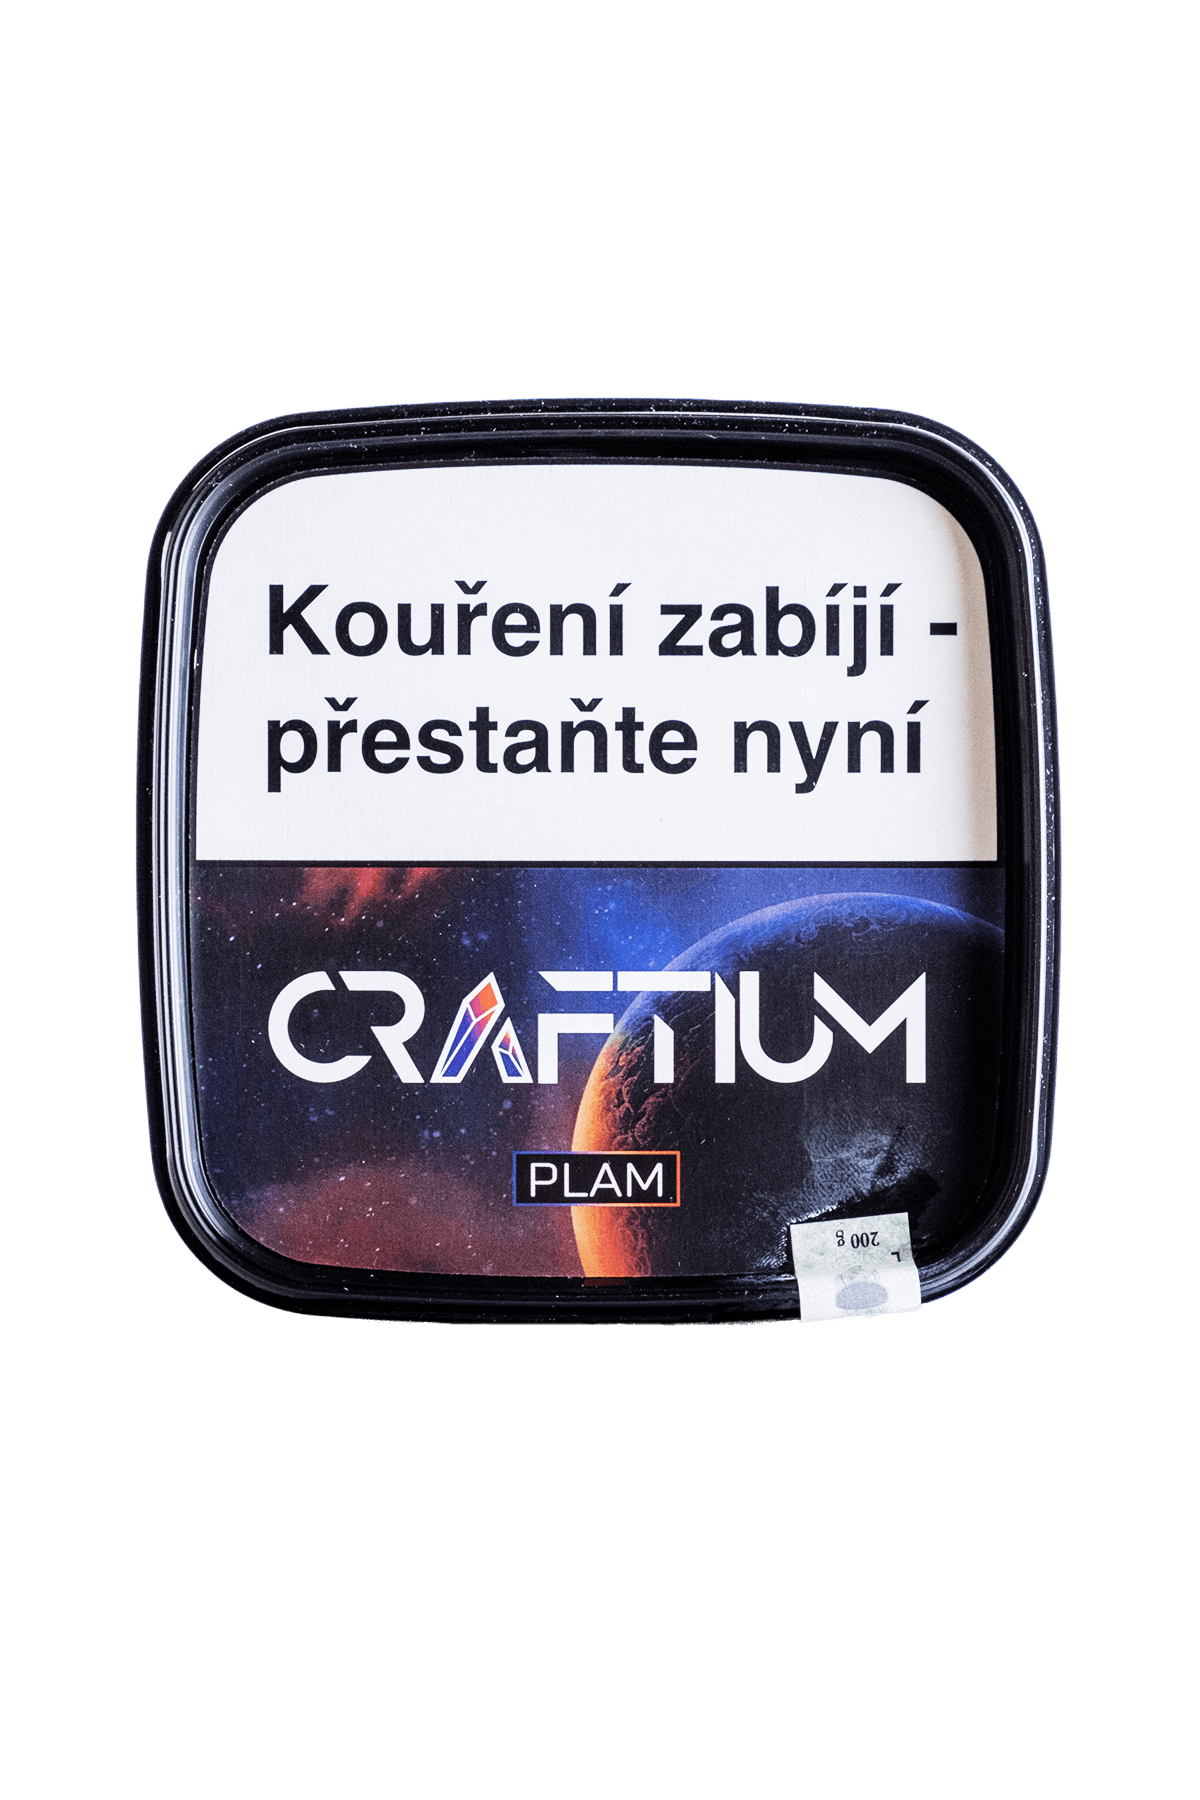 Tabák - Craftium 200g - Plam